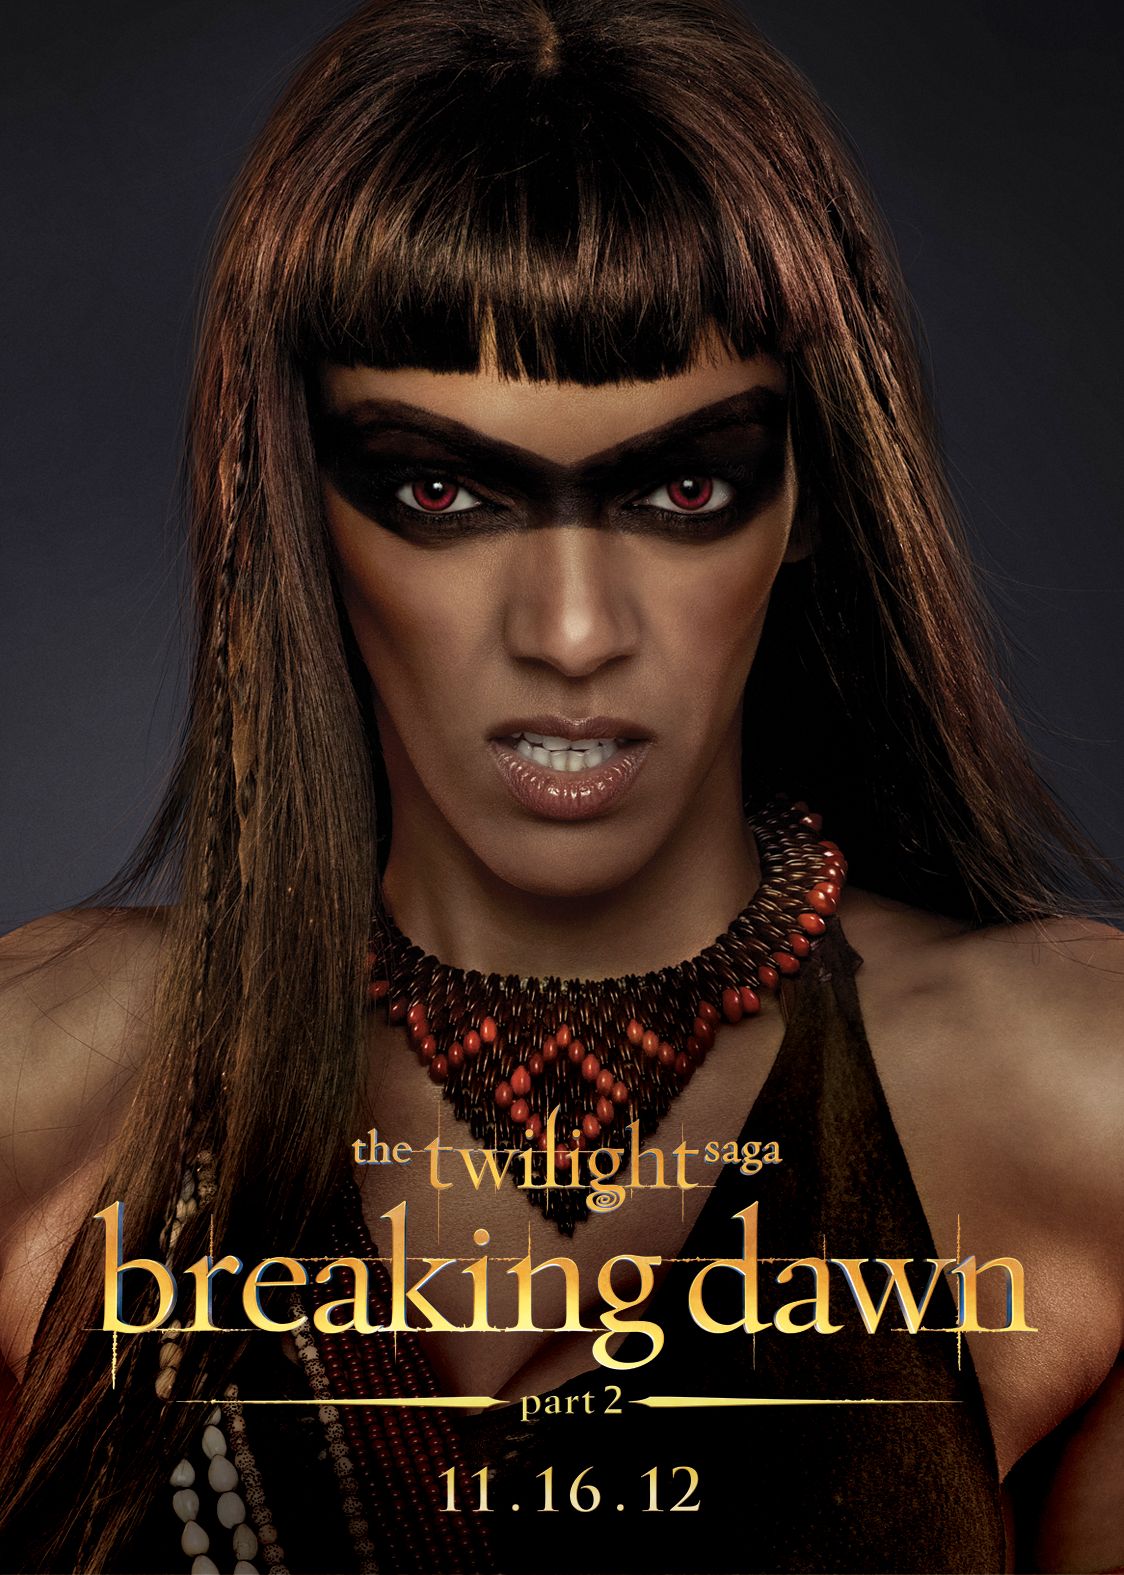 The Twilight Saga: Breaking Dawn - Part 2 Zafrian Poster